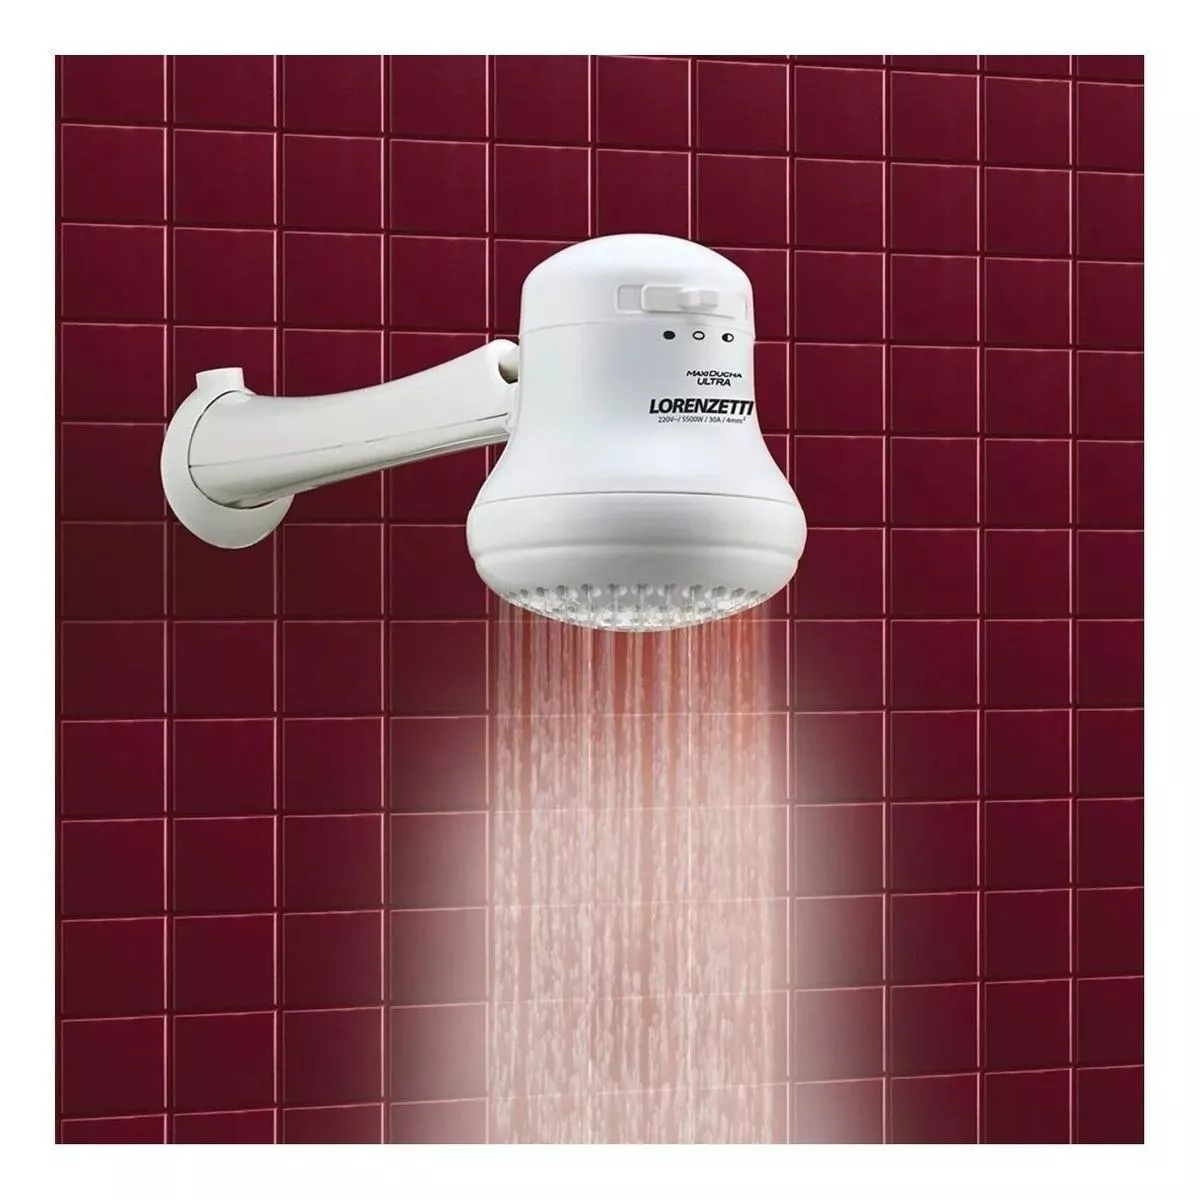 Tercera imagen para búsqueda de ducha electrica